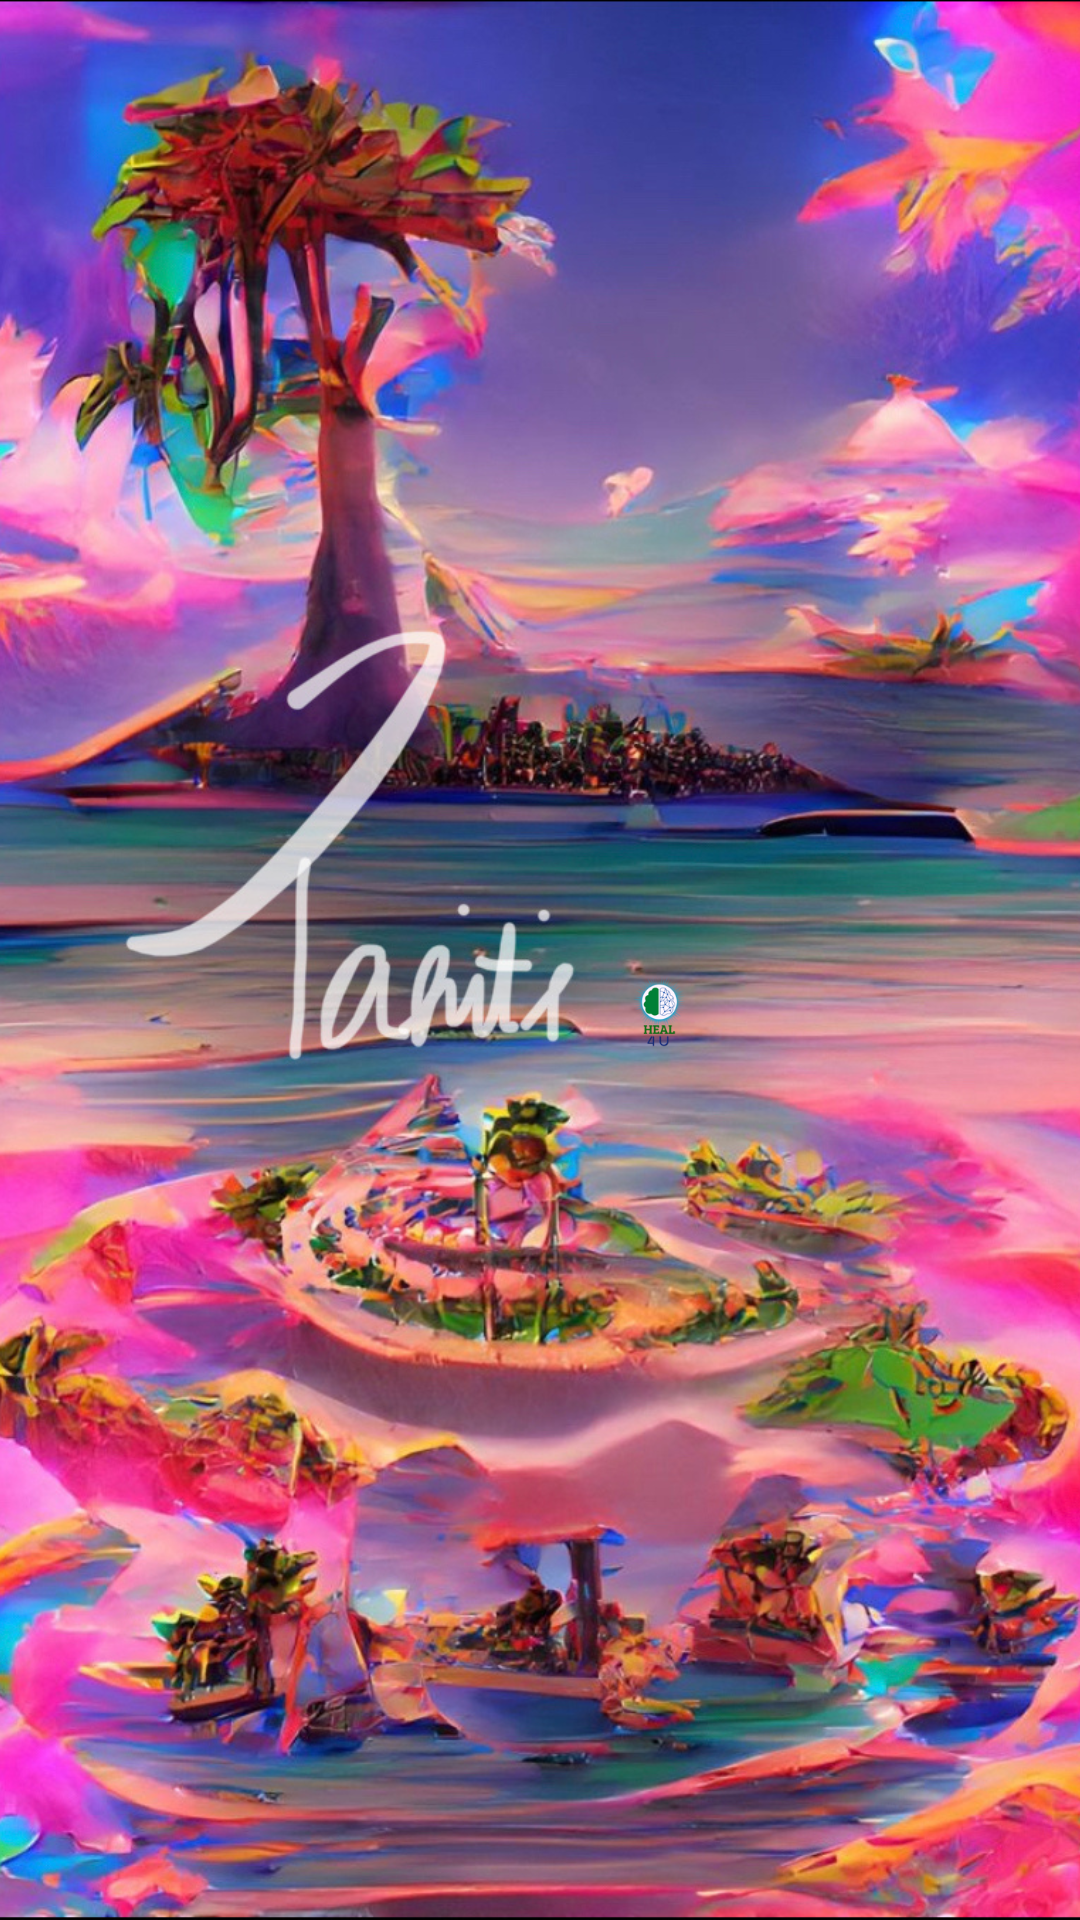 Tahiti: It’s A Magical Place